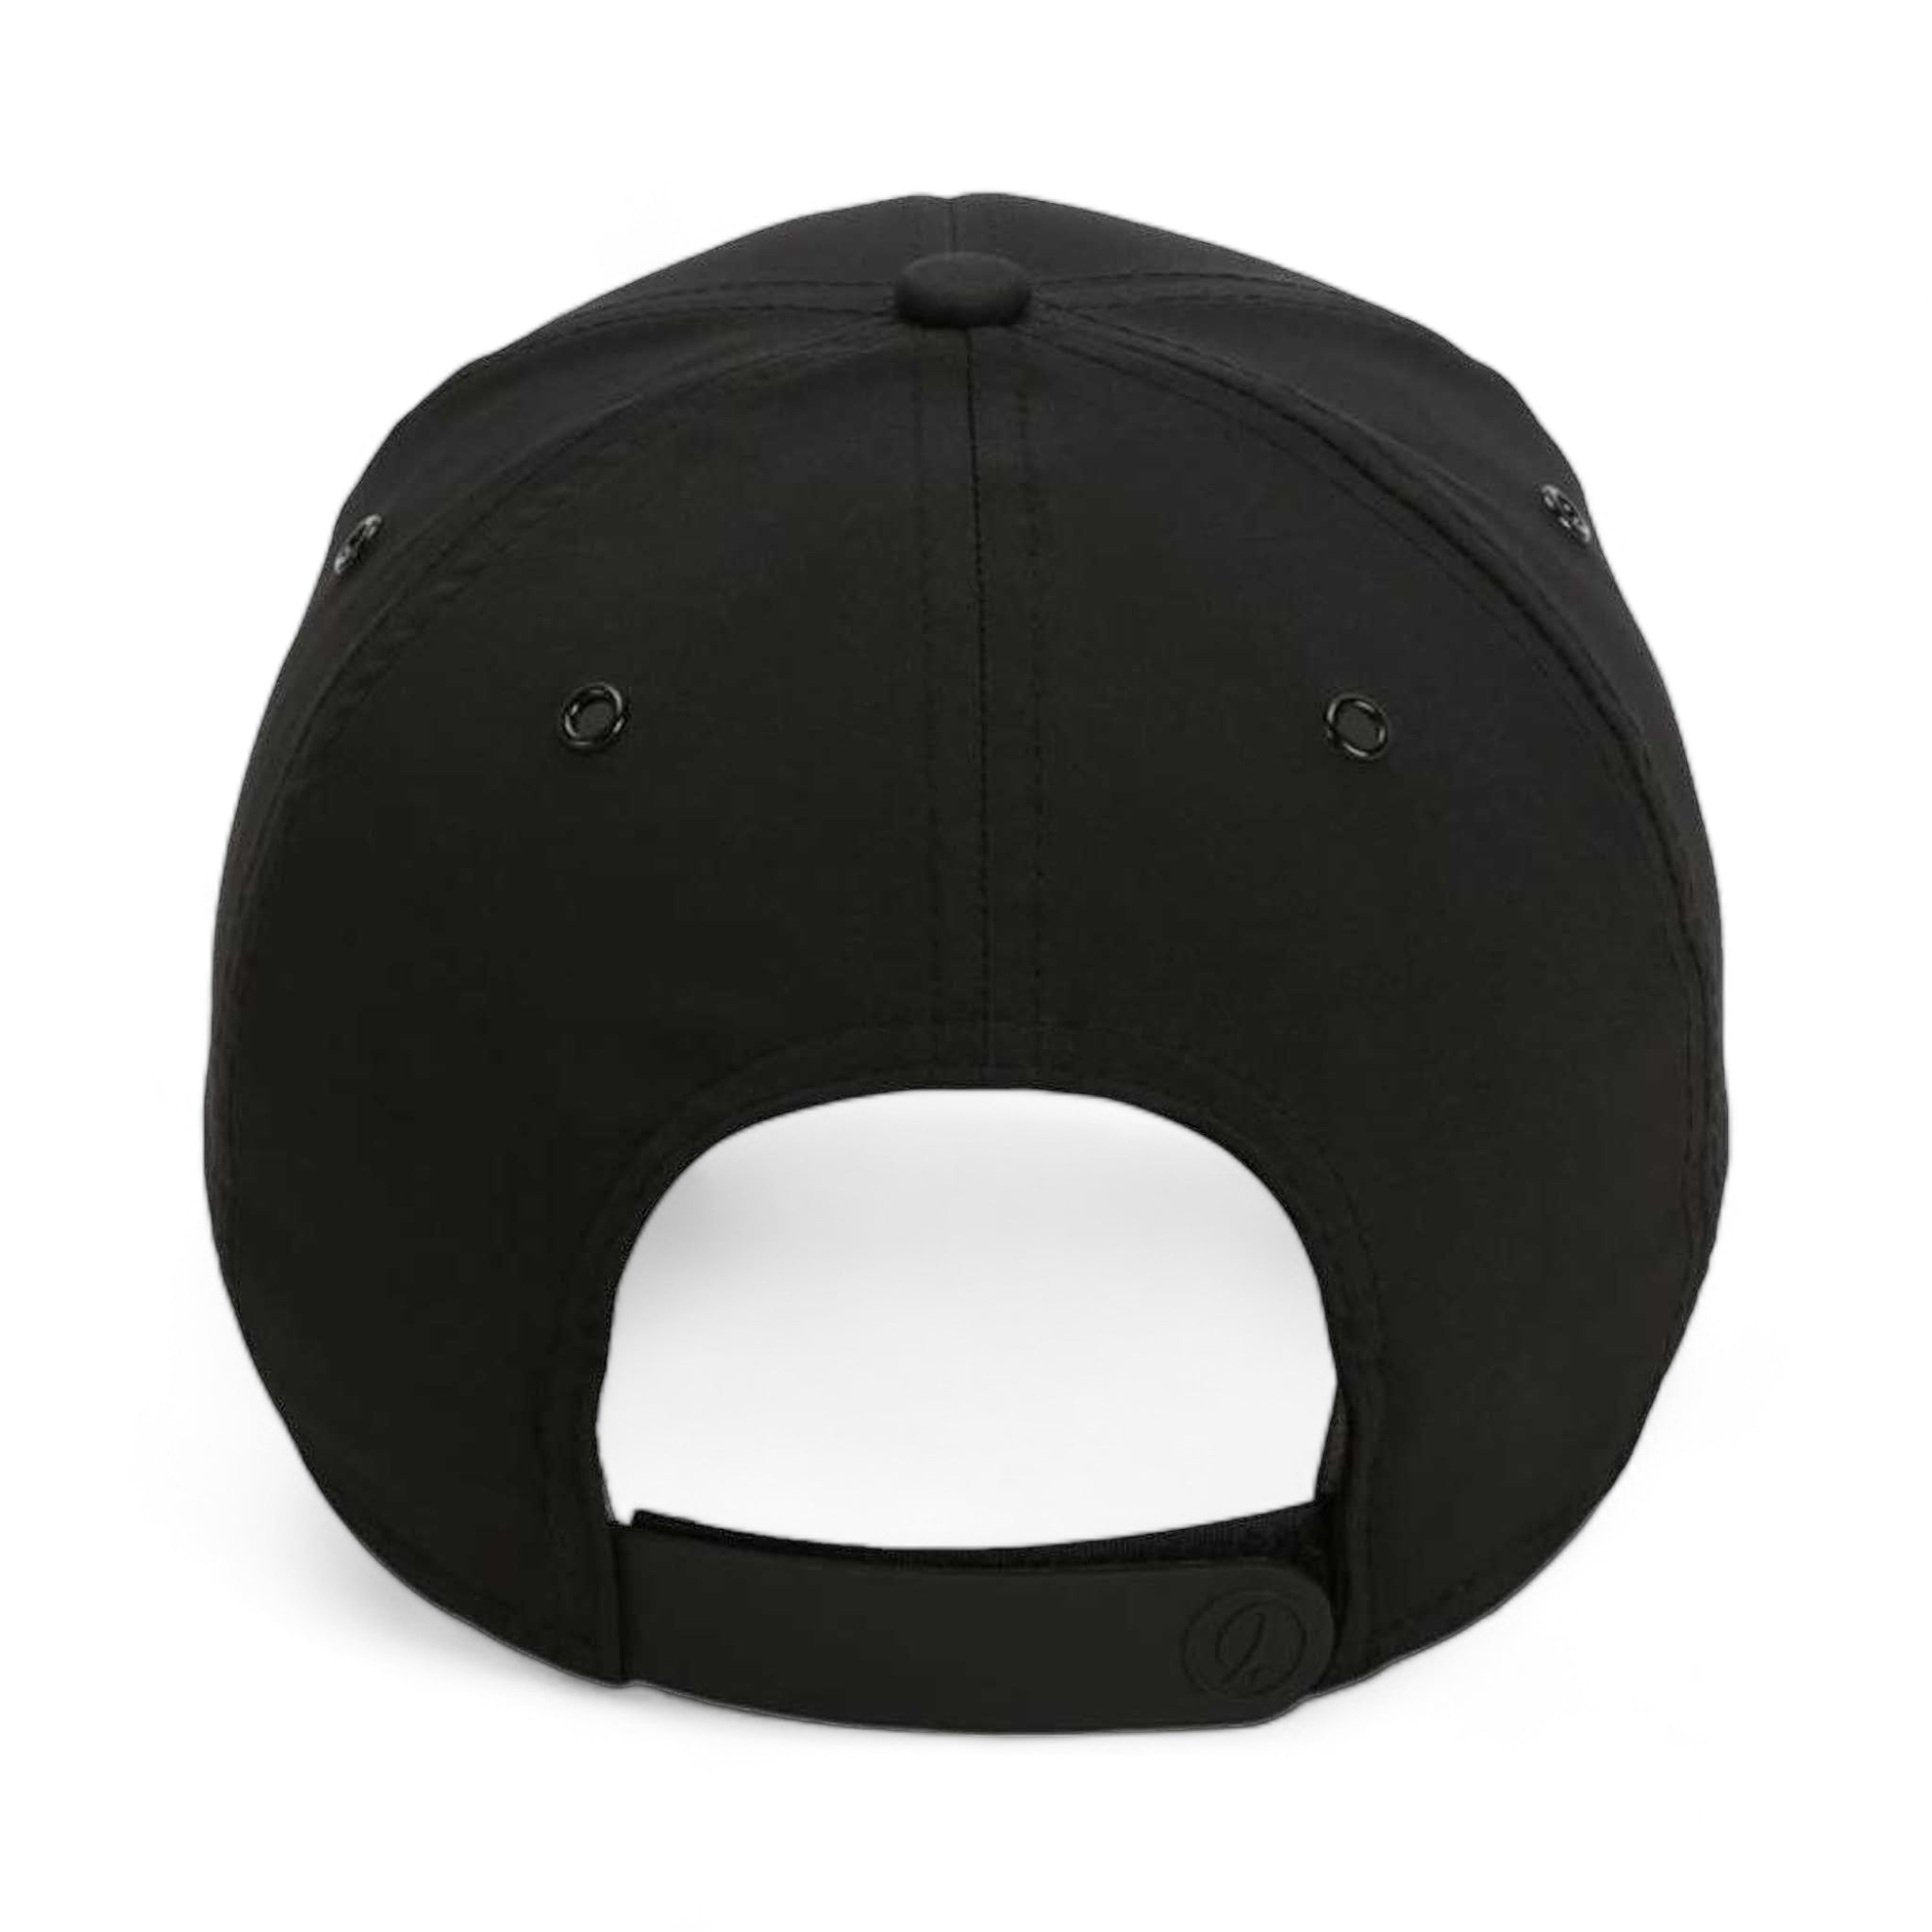 Back view of Imperial 6054 custom hat in black